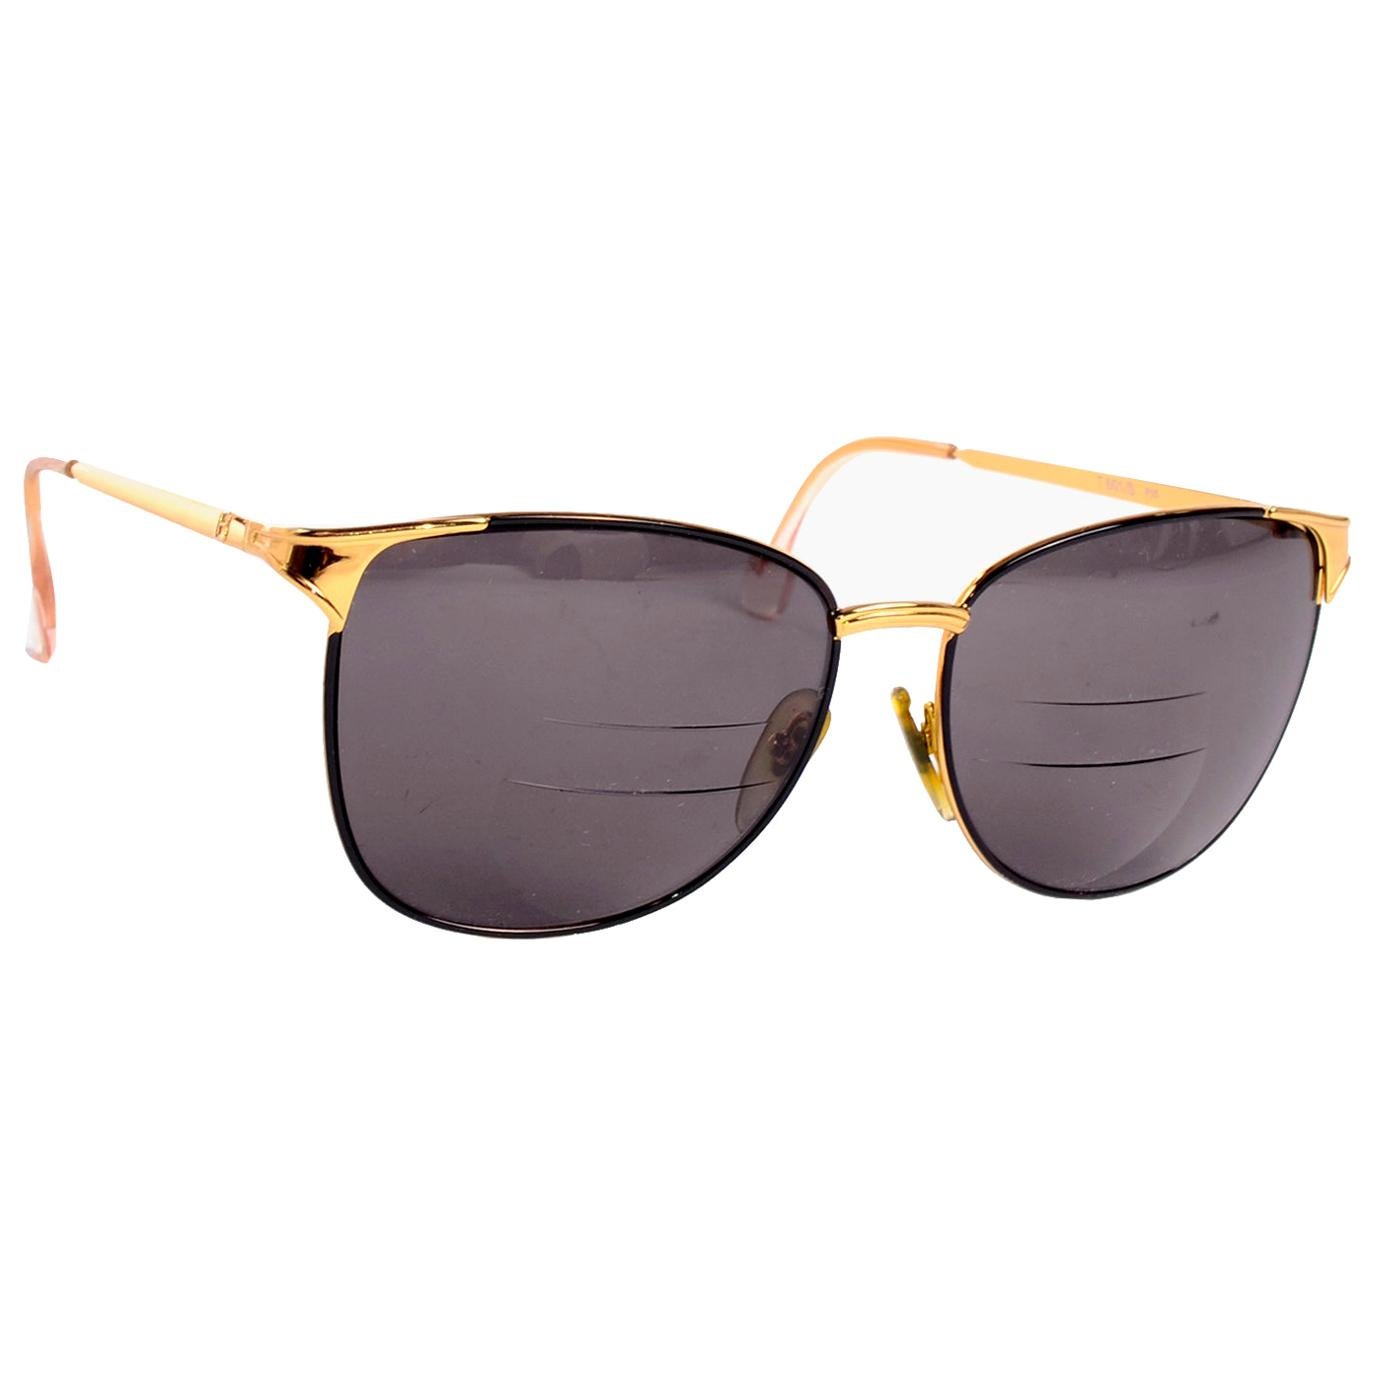 Laura Biagiotti Gold Rim Vintage Sunglasses Frames